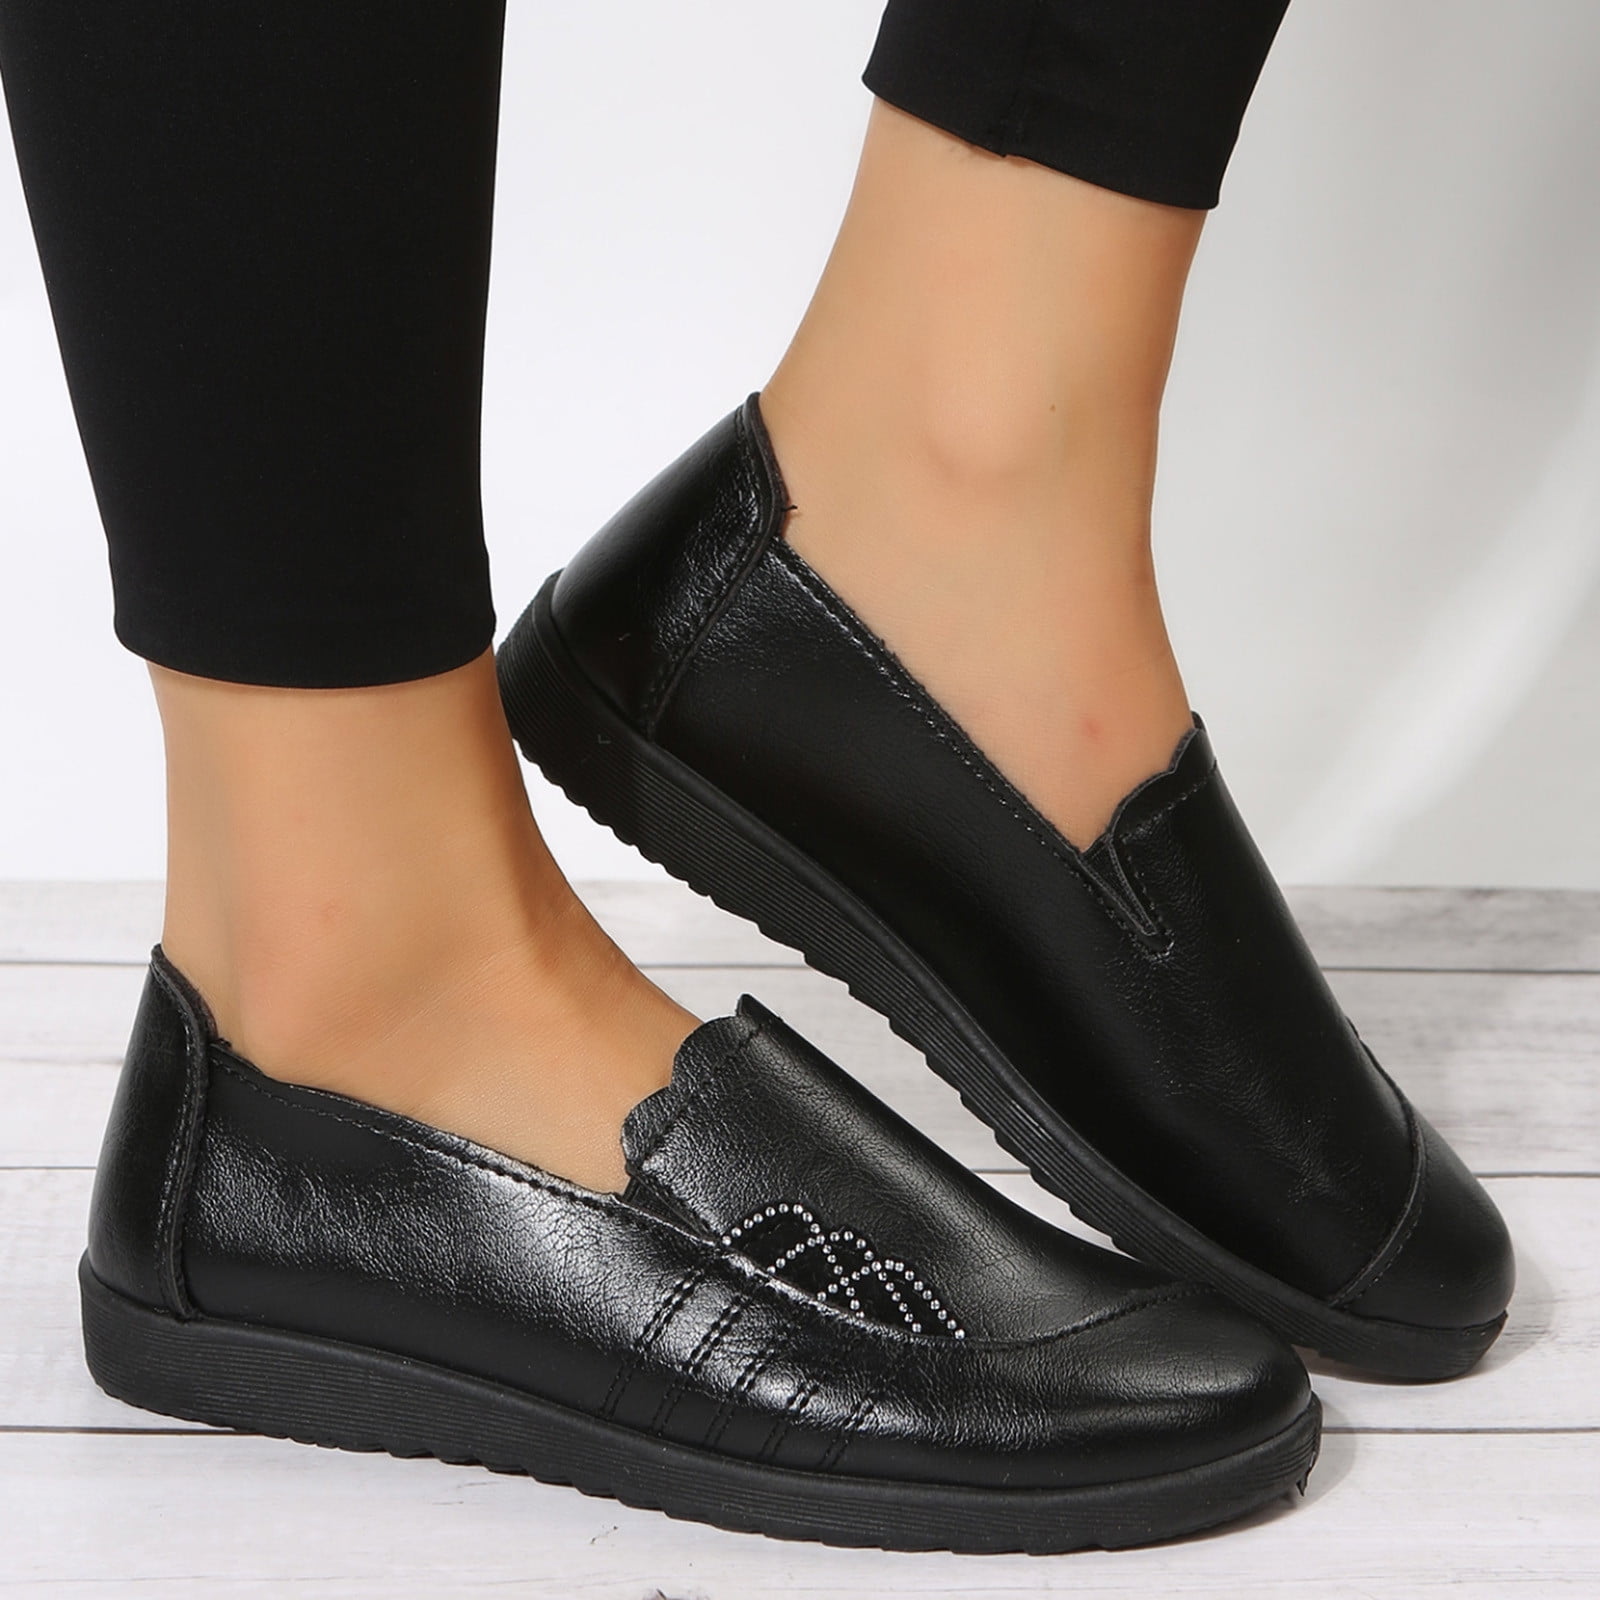 black dress shoes women